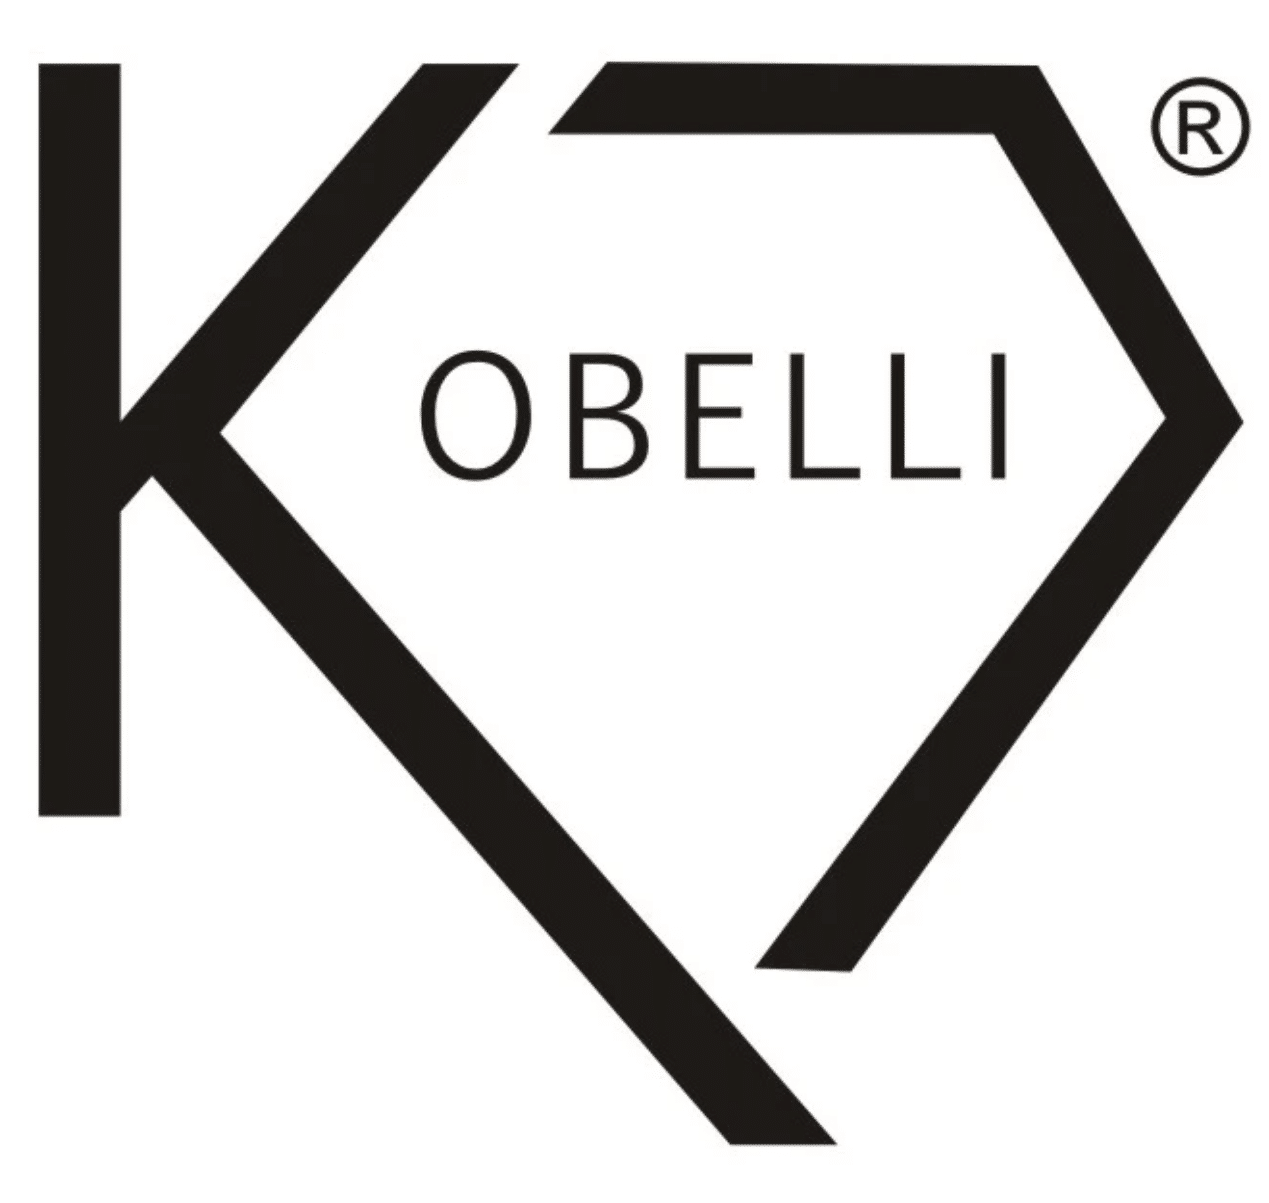 Kobelli logo